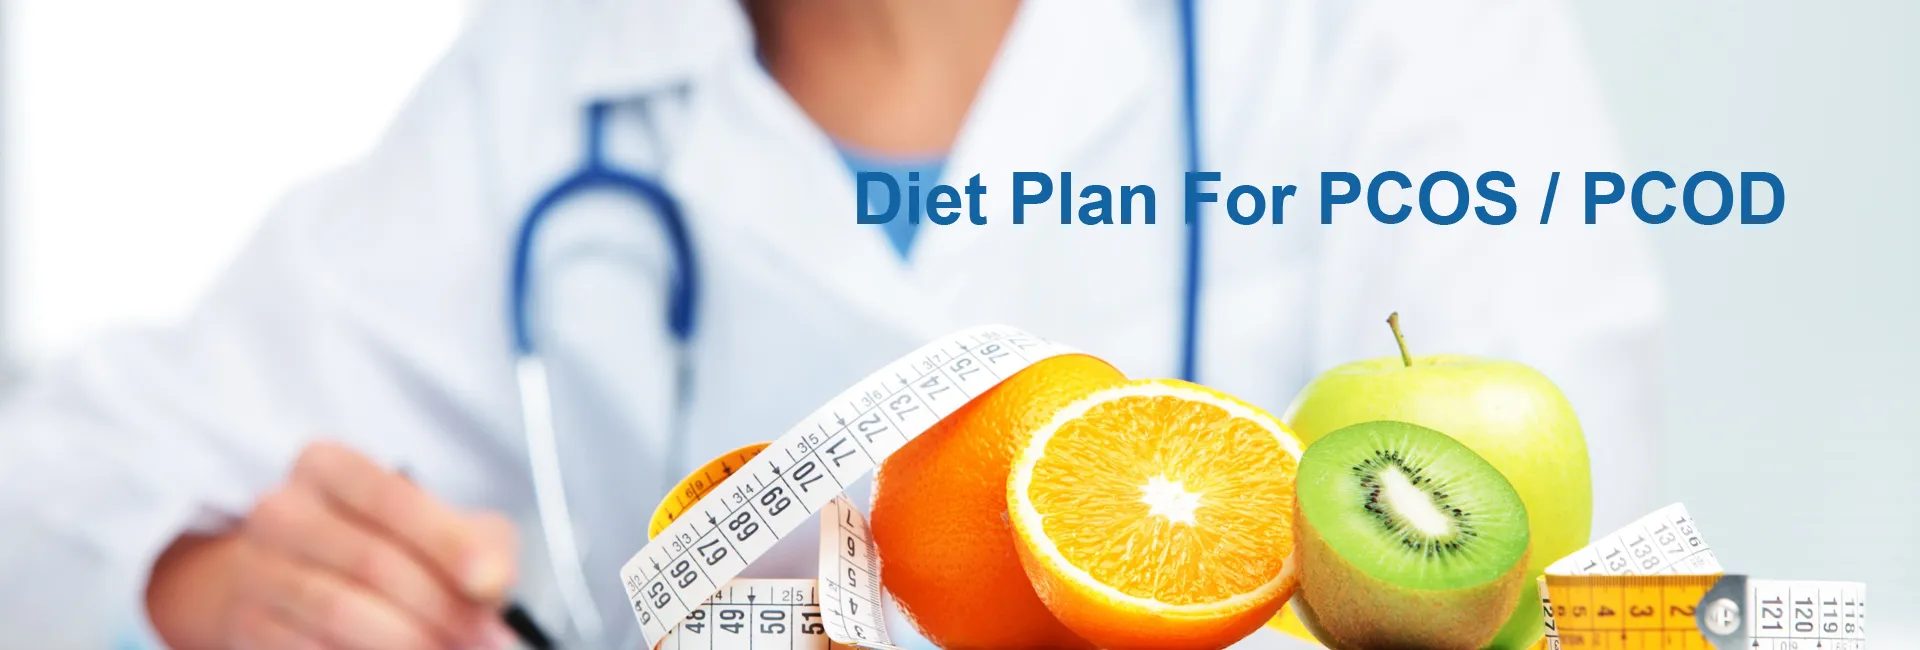 Diet Plan For PCOS / PCOD In Kingston